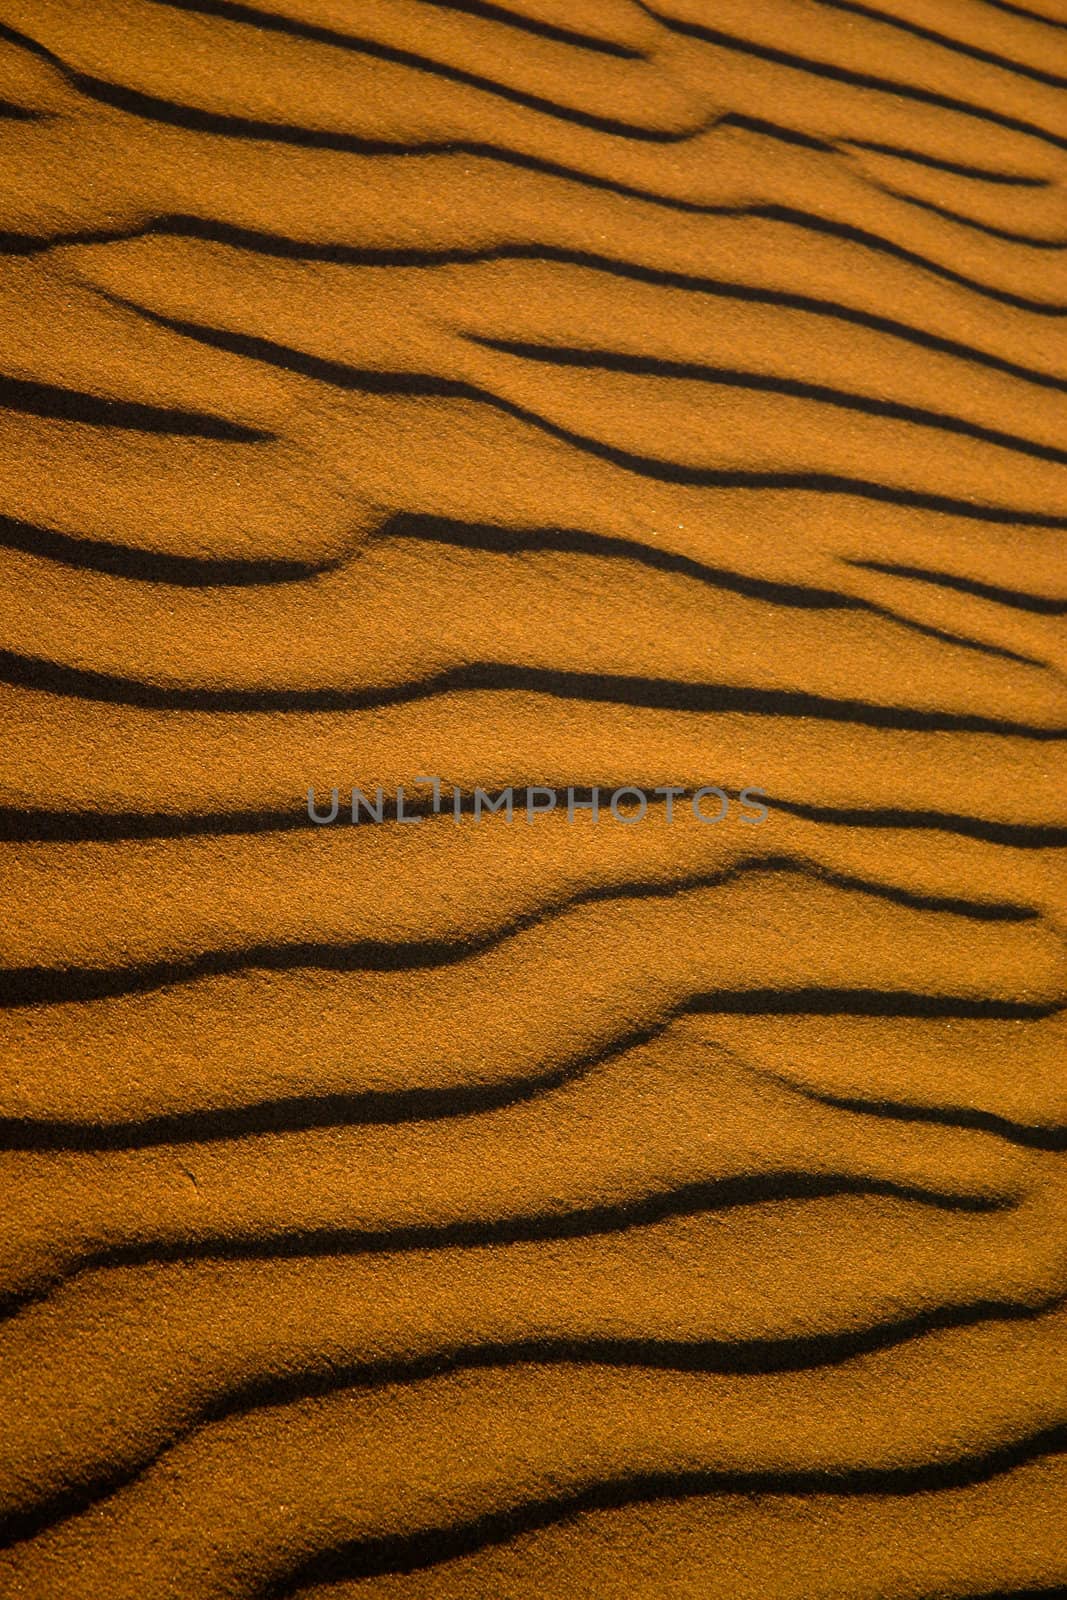 Ripples in sand dunes in the Namib desert Namibia